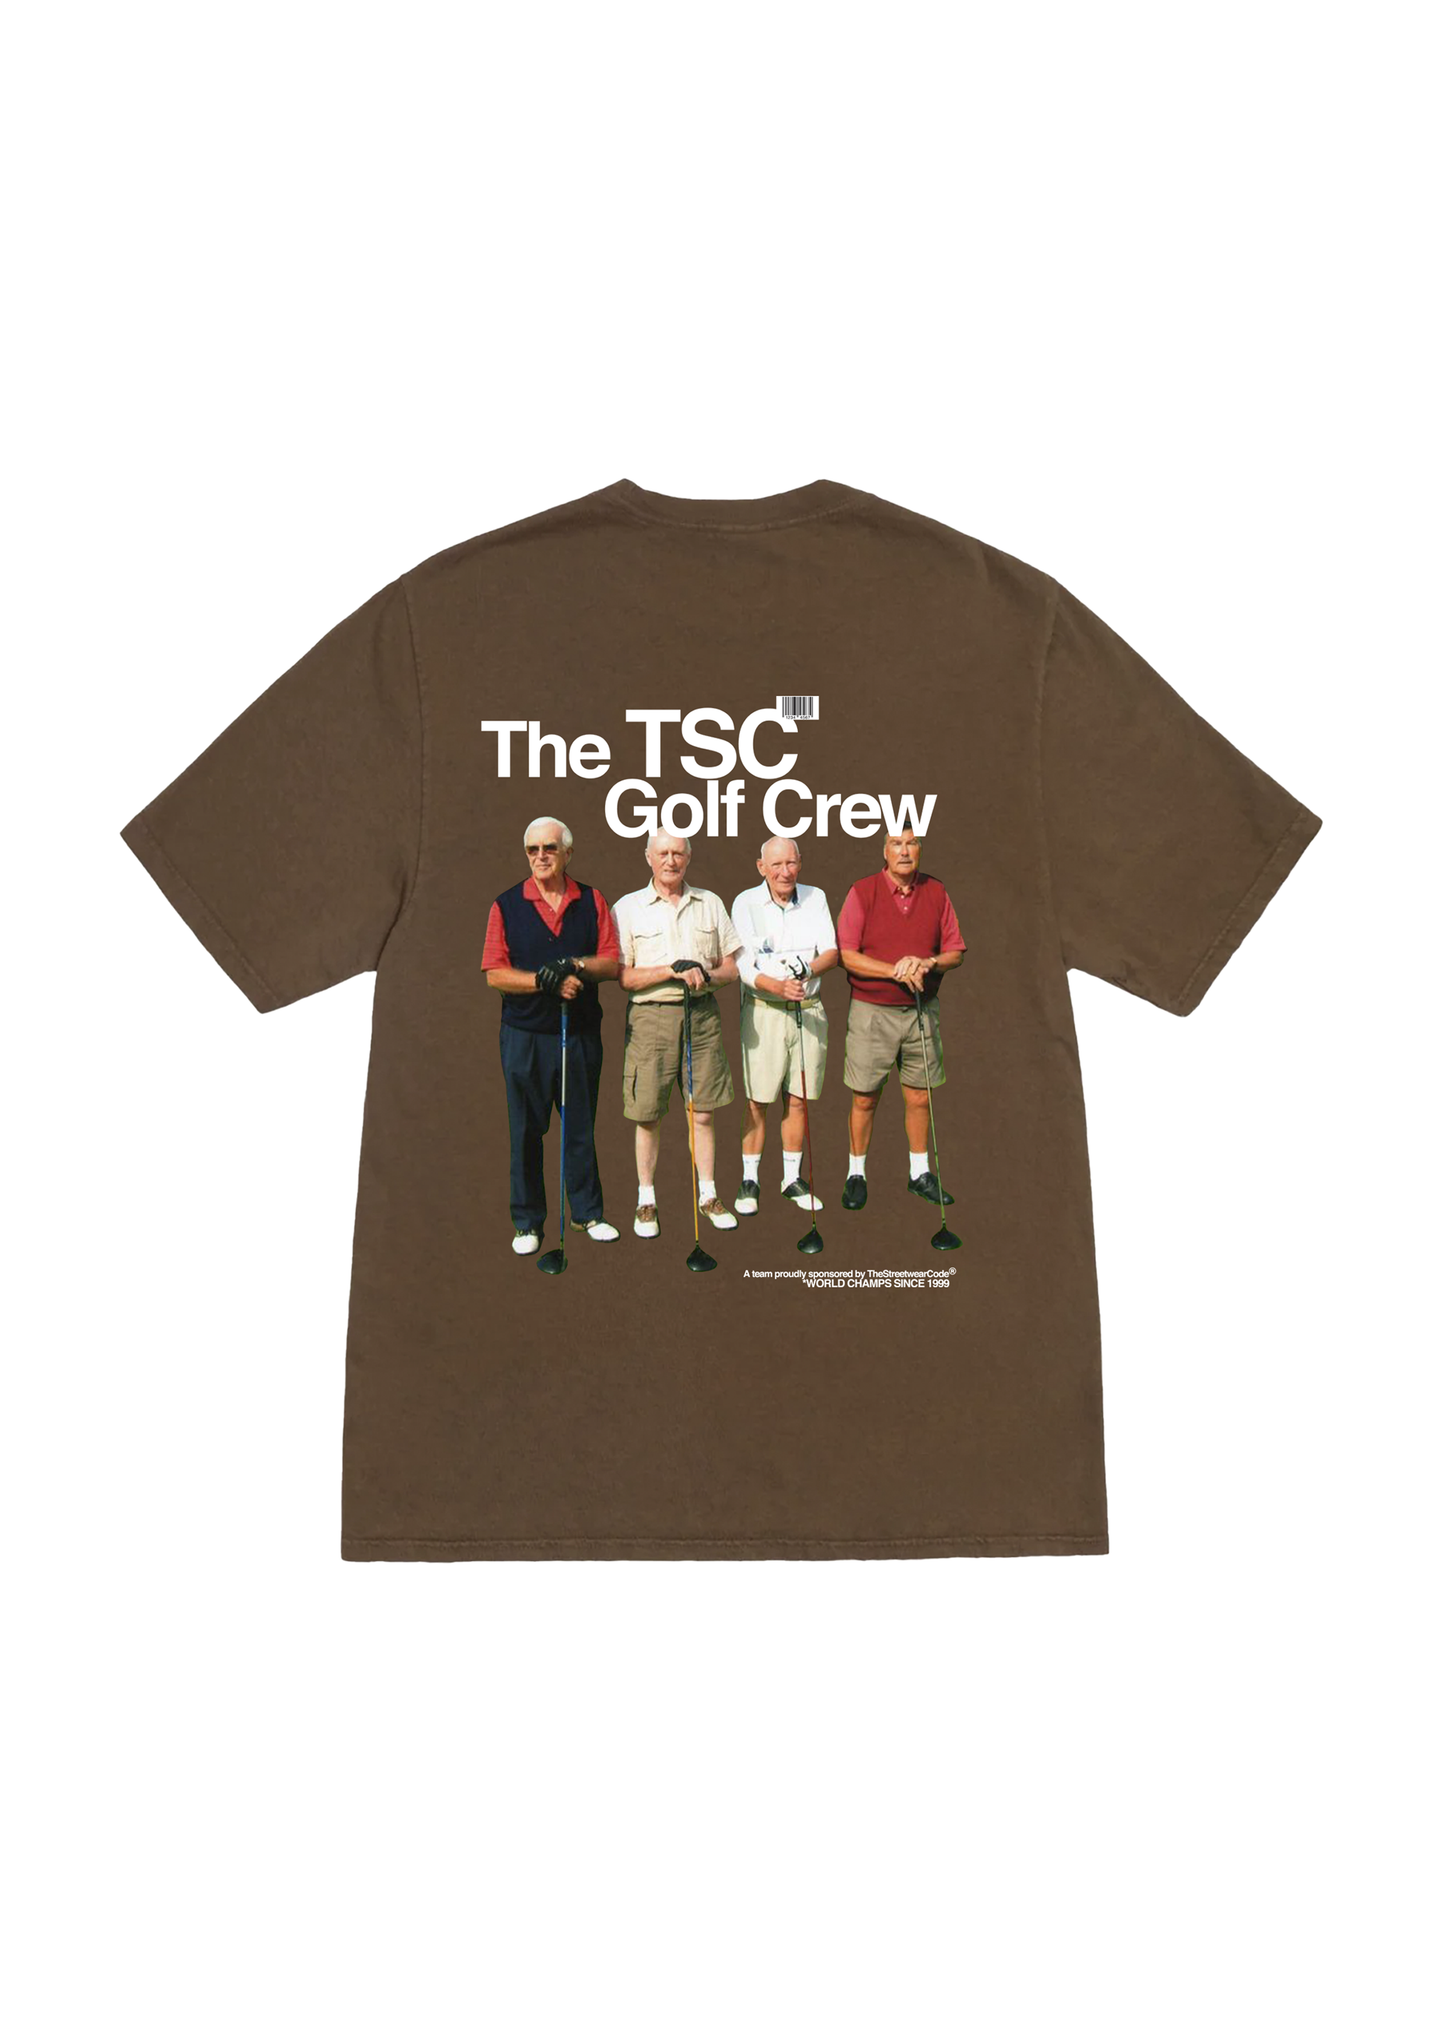 The TSC Golf Crew